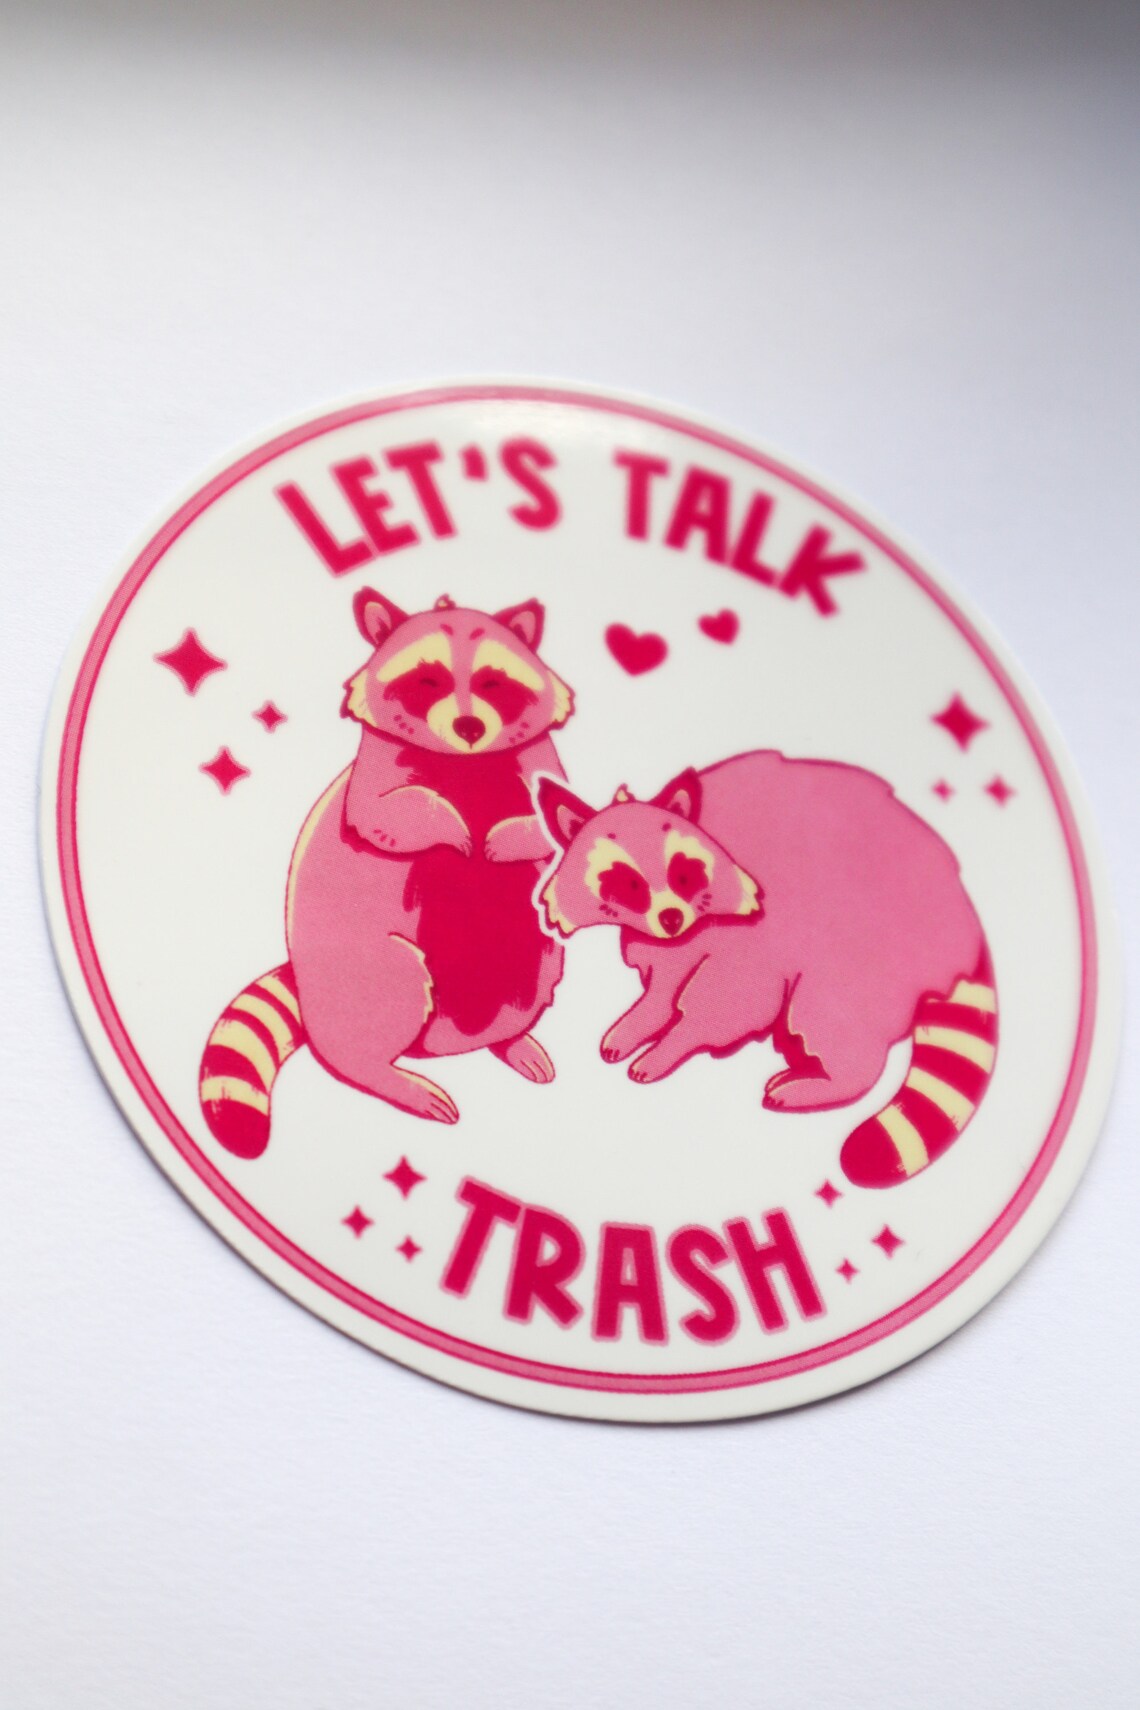 Let’s Talk Trash - Sticker